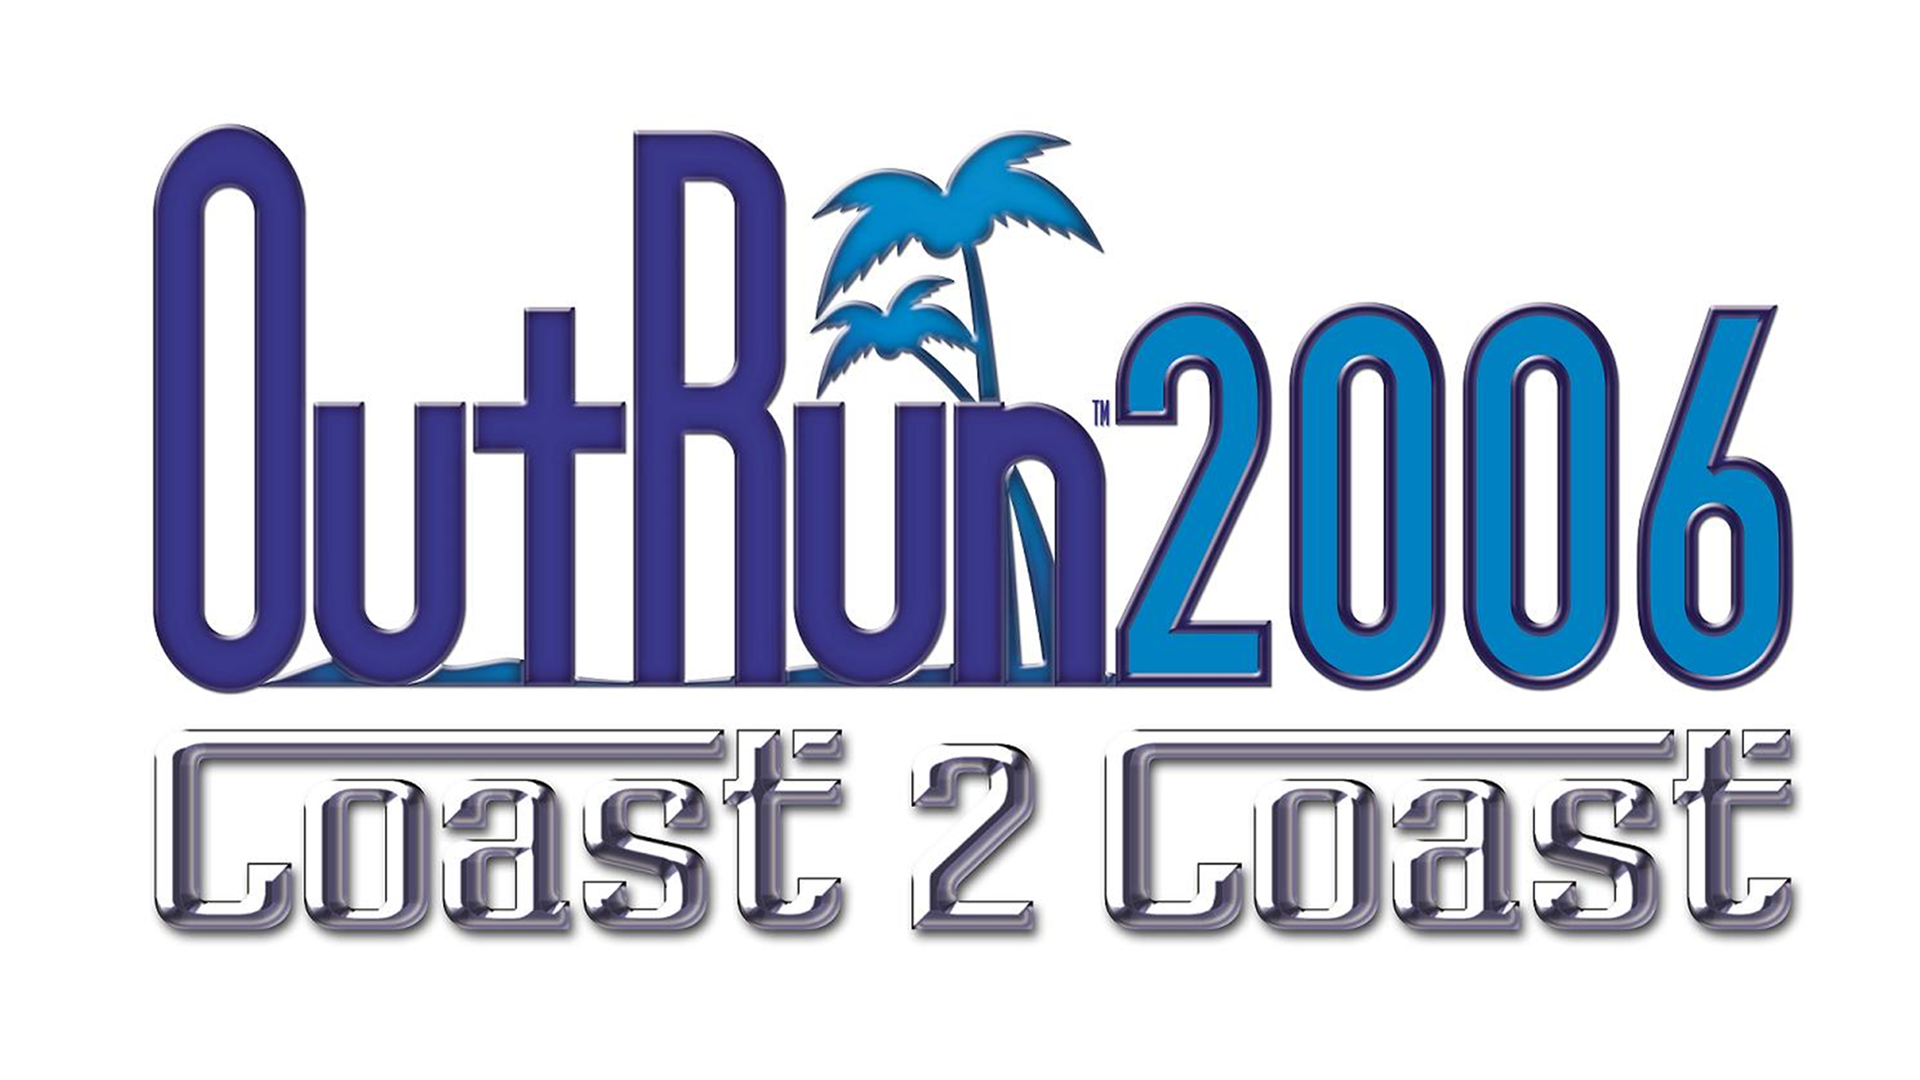 OutRun 2006: Coast 2 Coast Logo